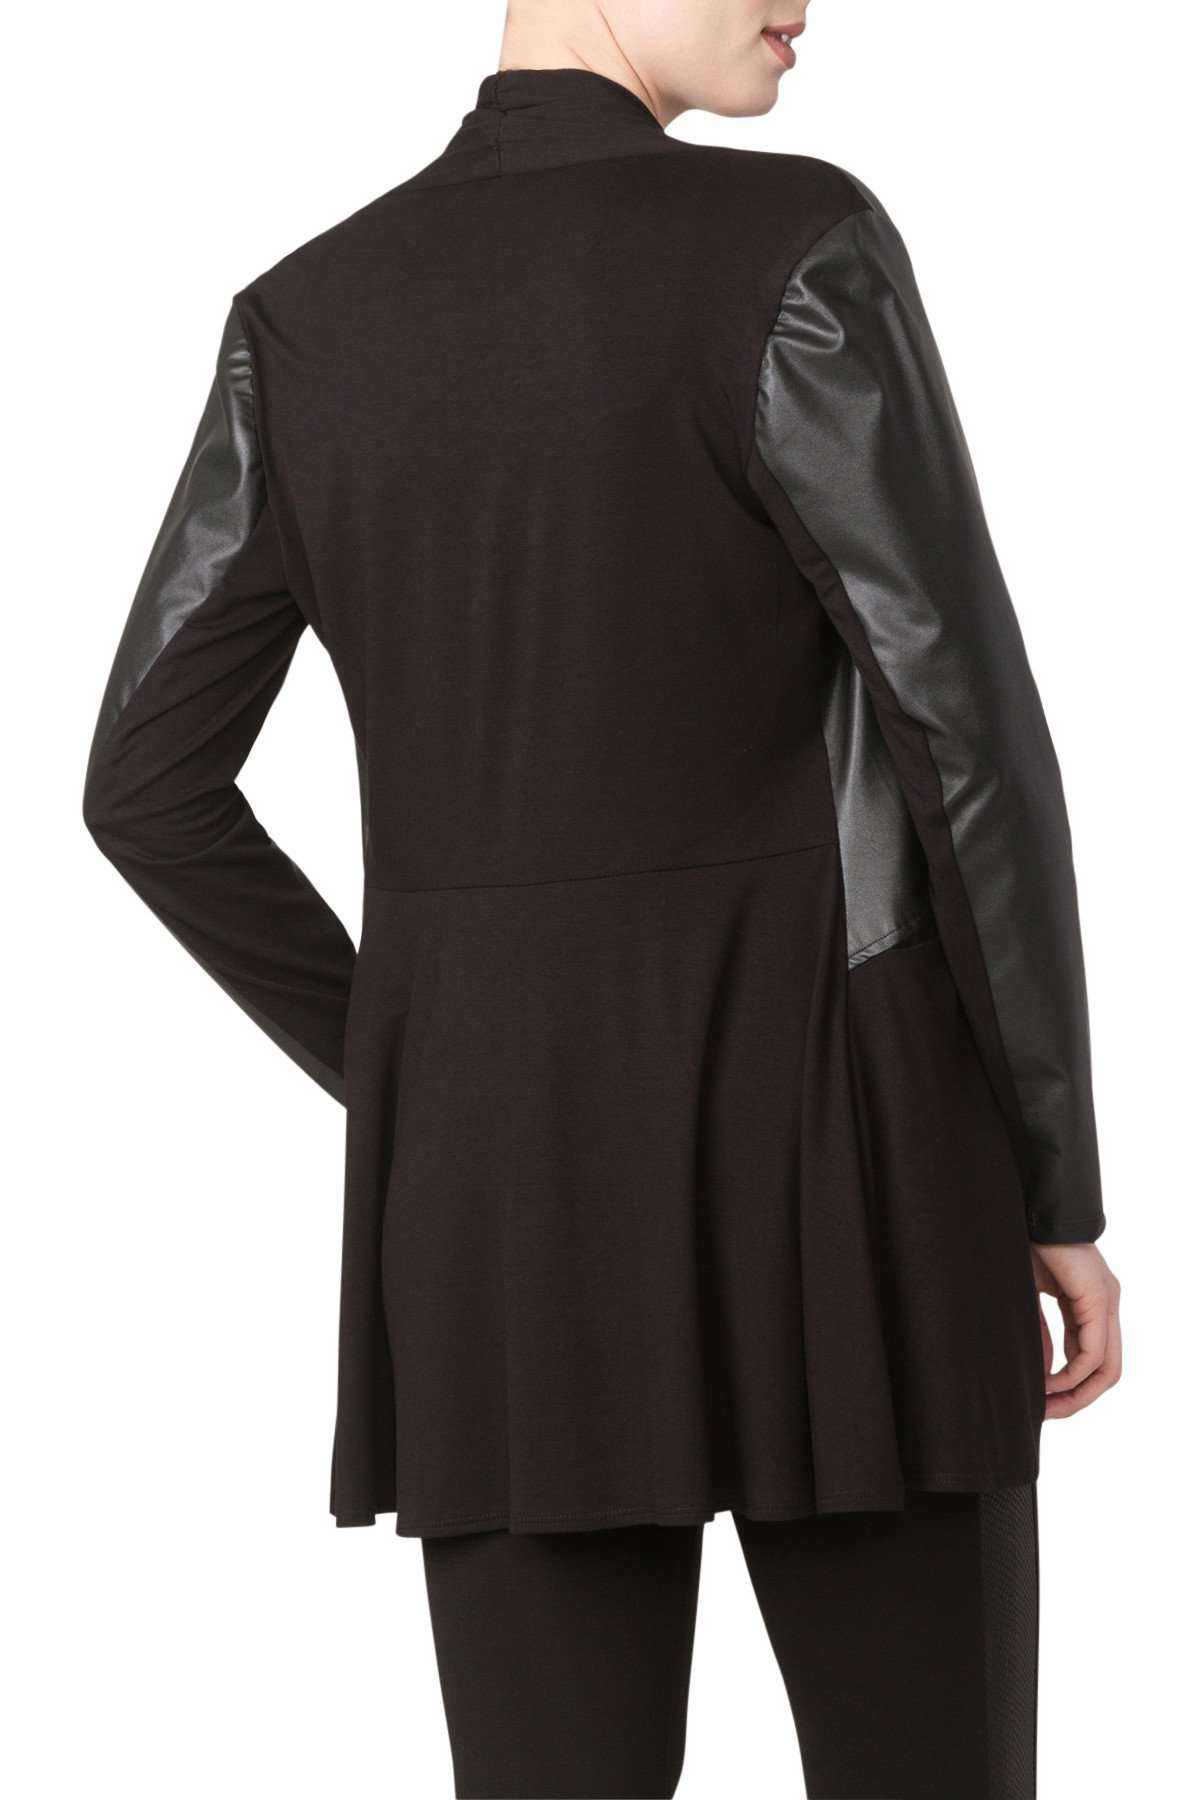 Women's Jacket XXLarge Size Black Jacket Leather Sleeves On Sale 505 OFF Made in Canada - Yvonne Marie - Yvonne Marie